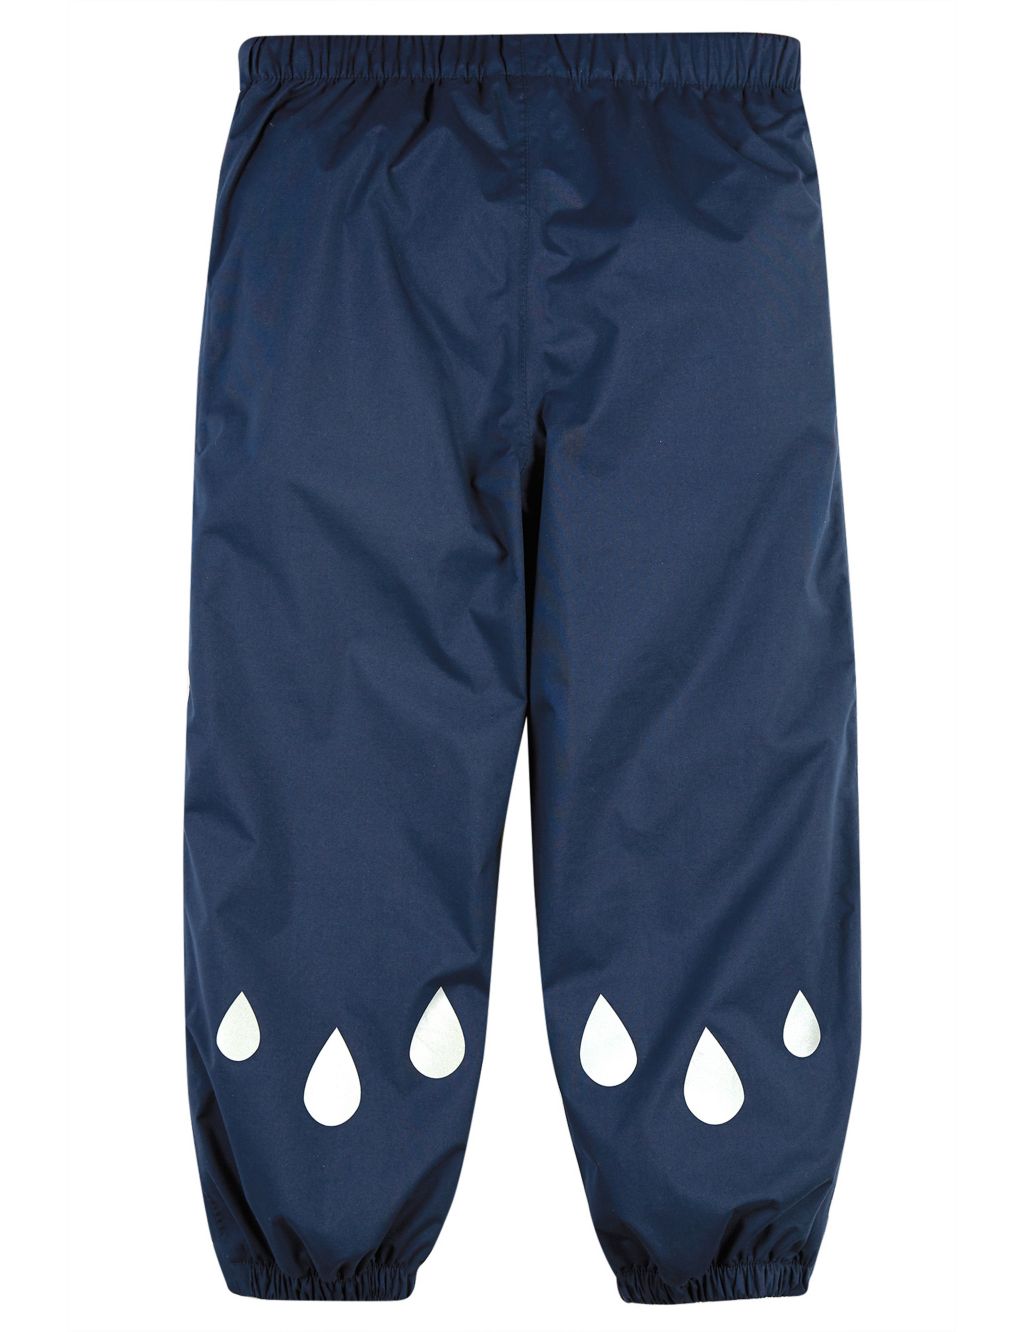 Rain Or Shine Printed Waterproof Trousers (1-10 Yrs) image 1